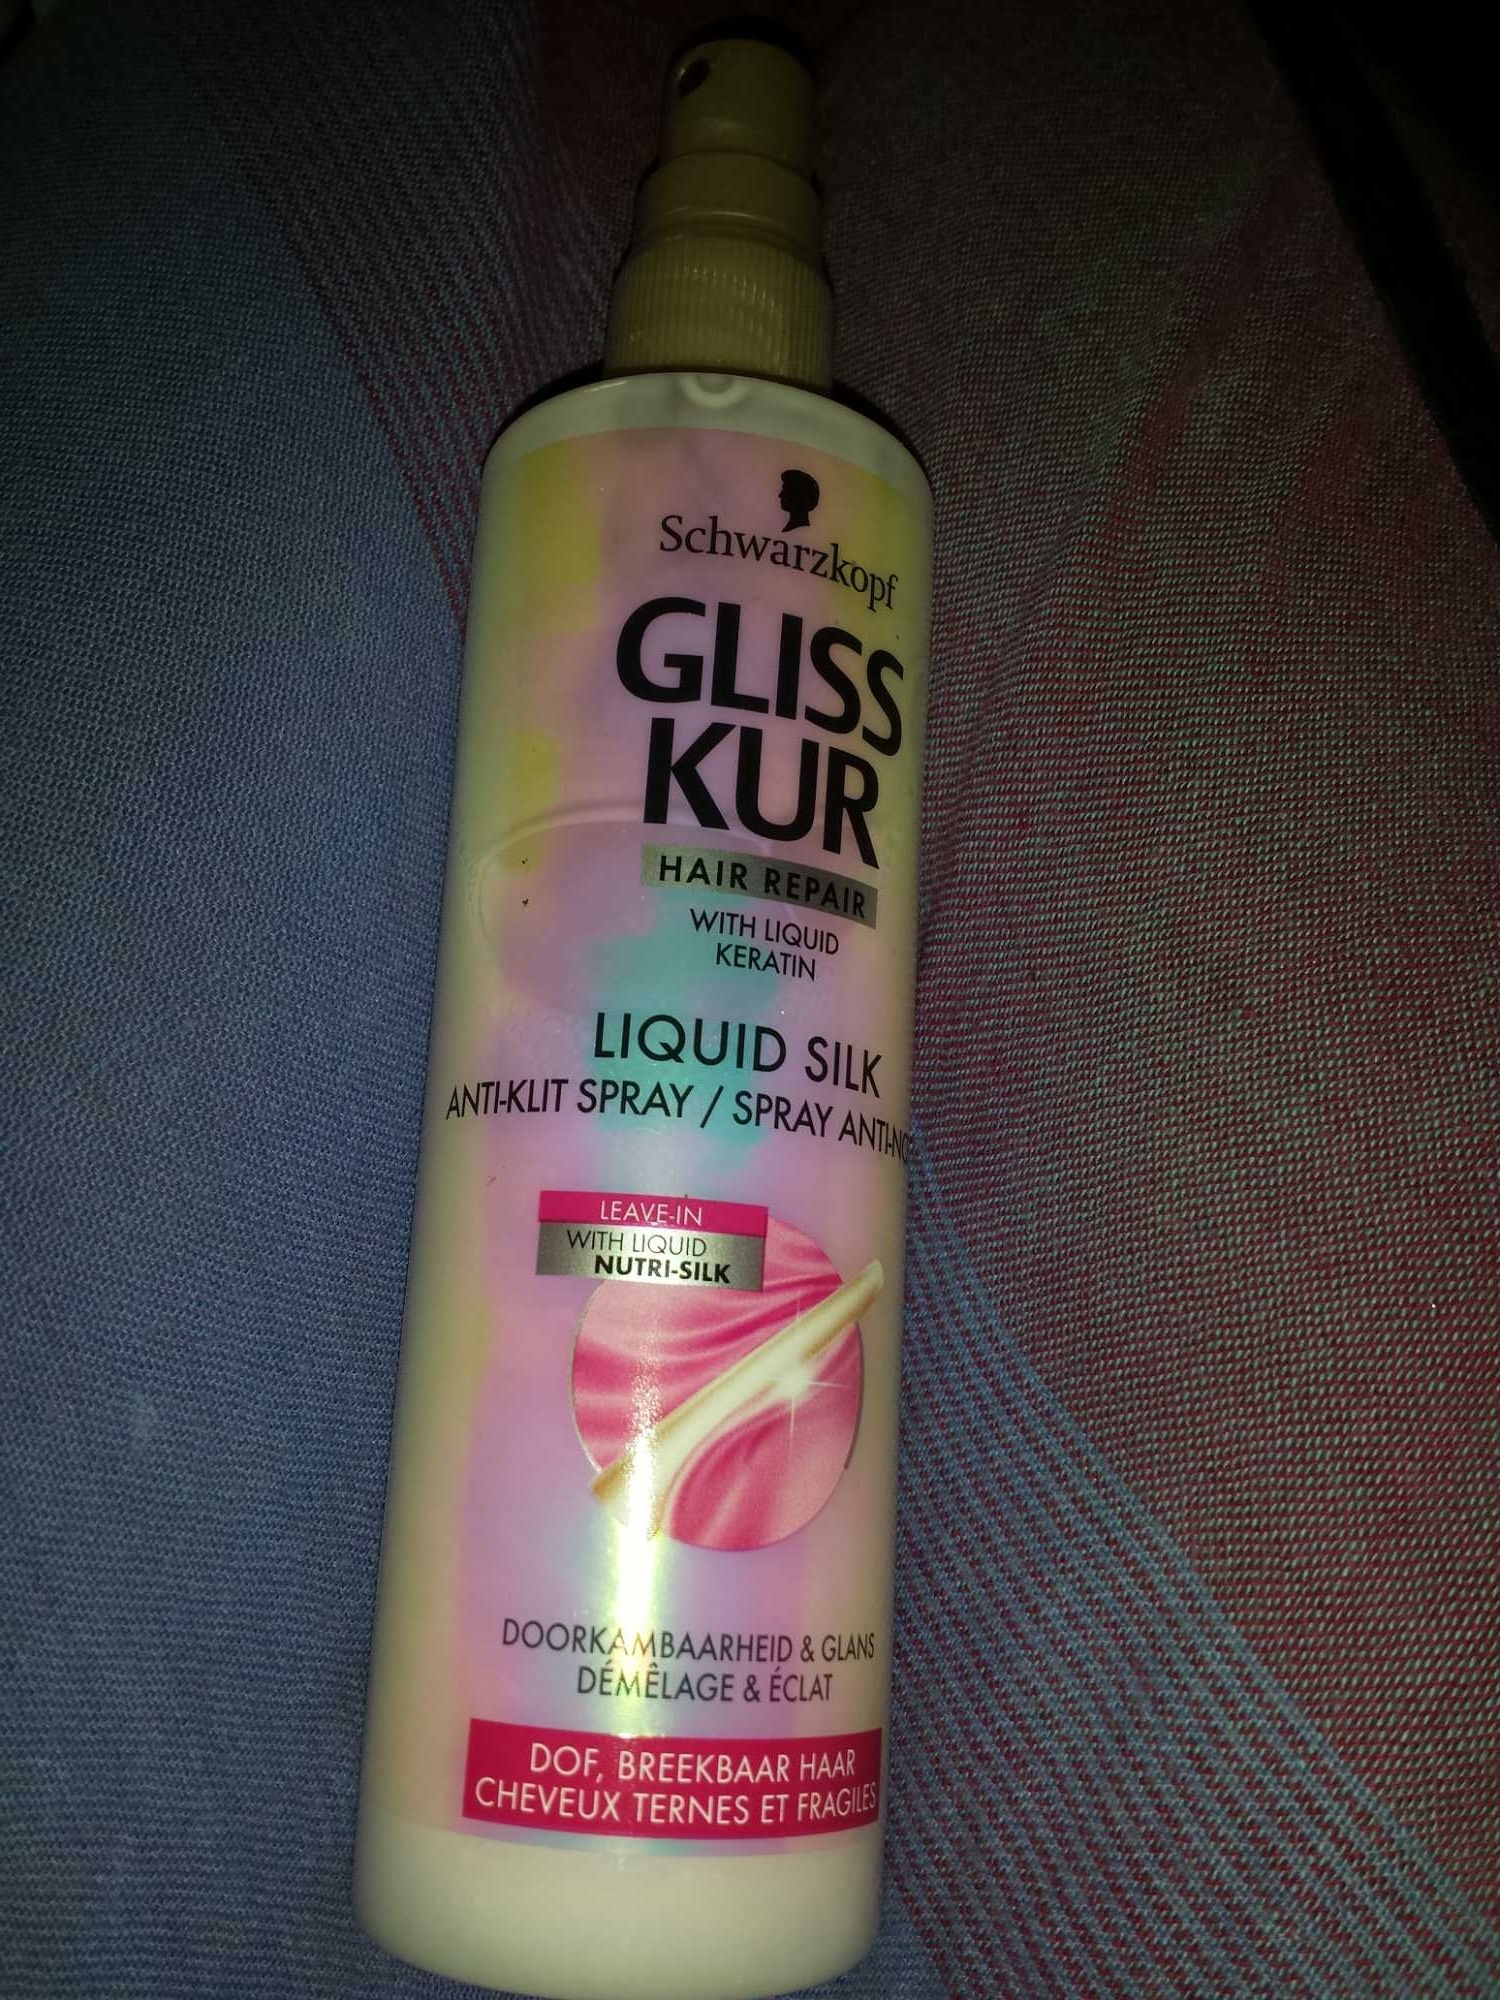 Liquid Silk - Produkt - en